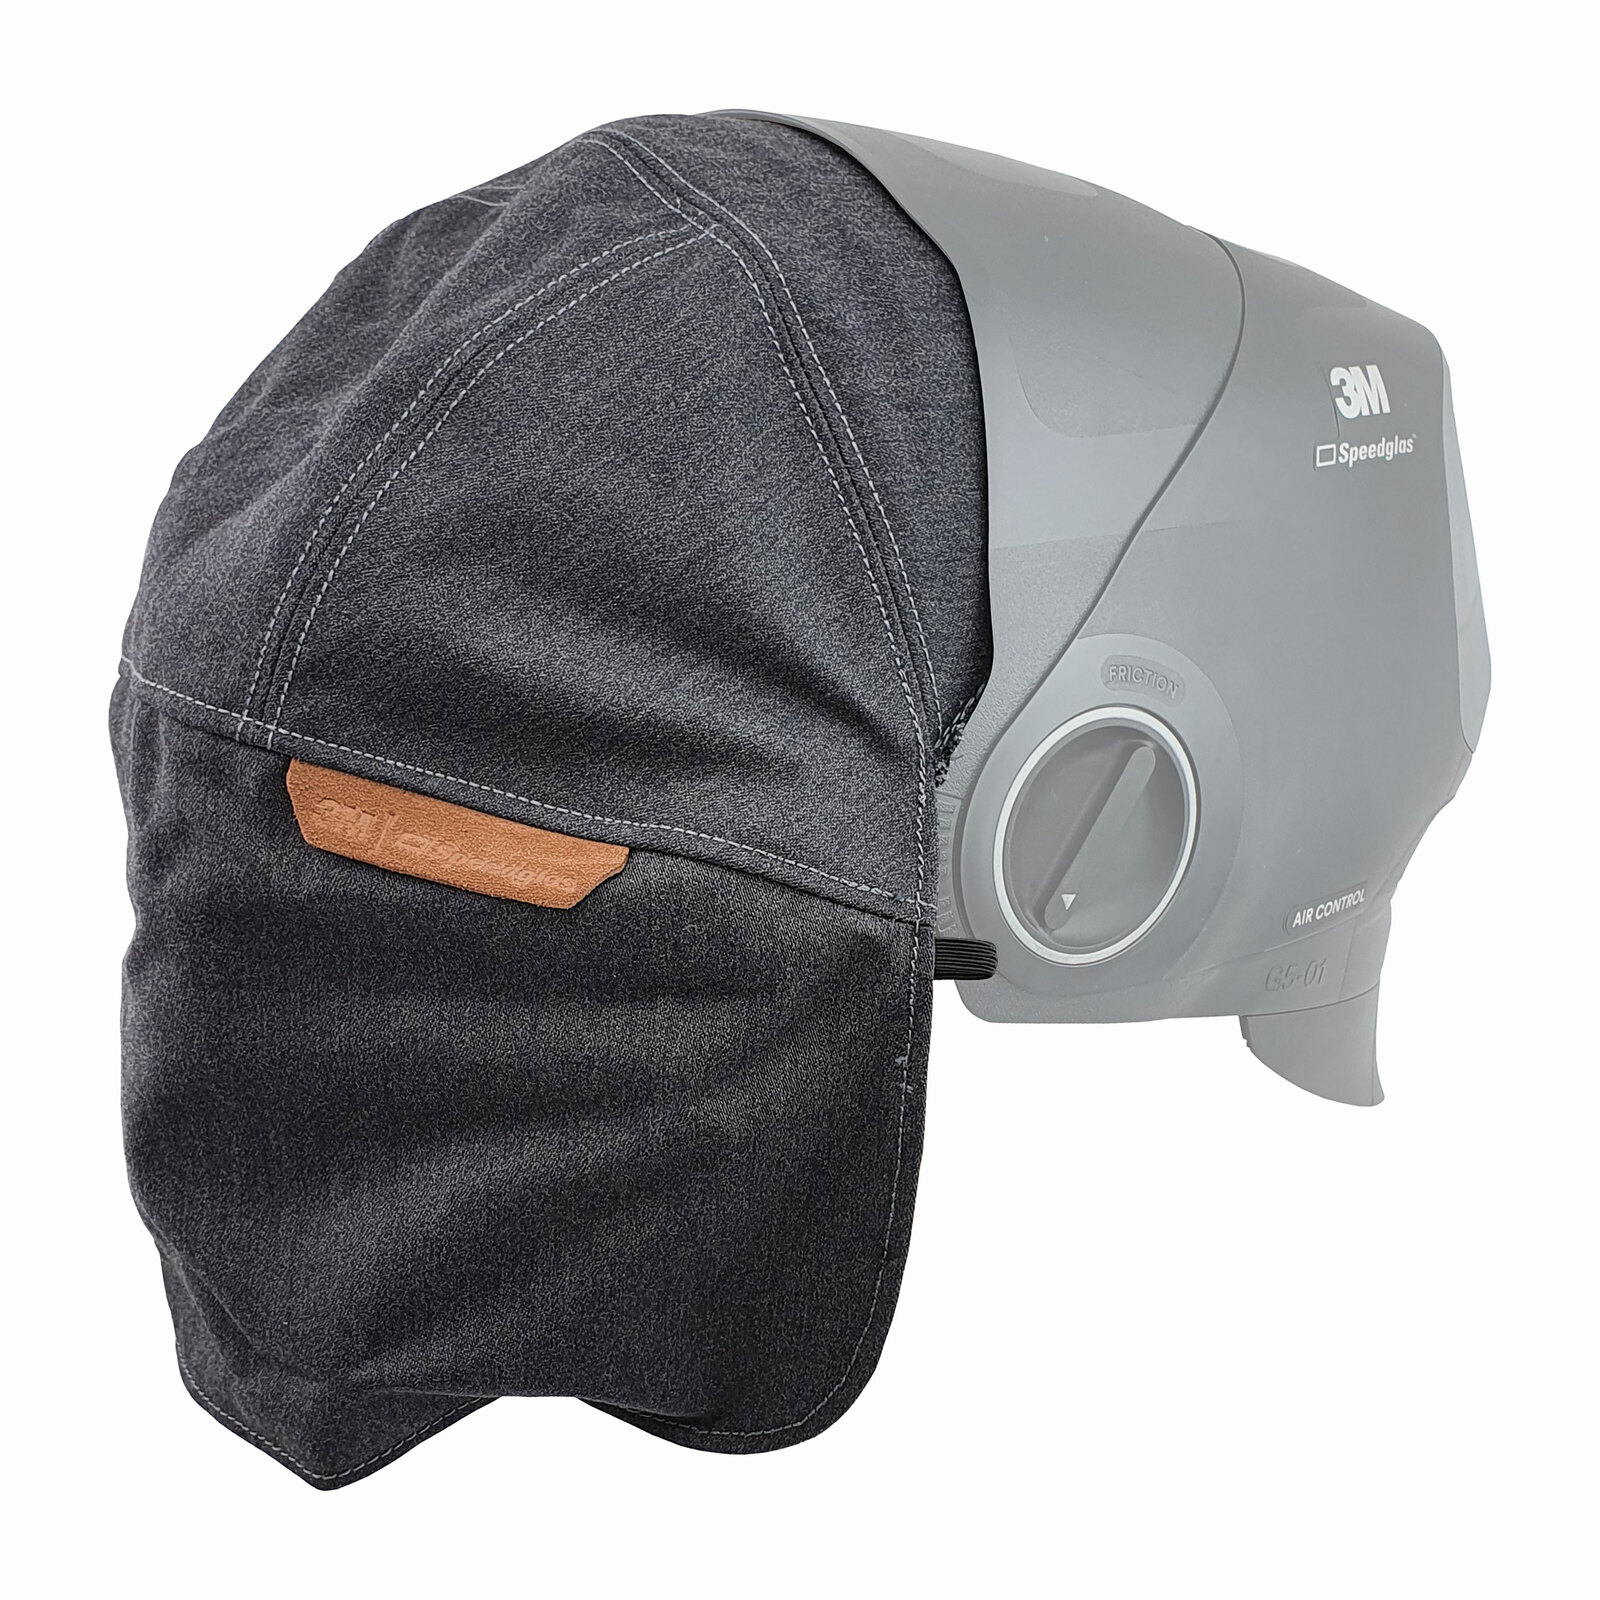 Speedglas G5-01 Head protection fabric large